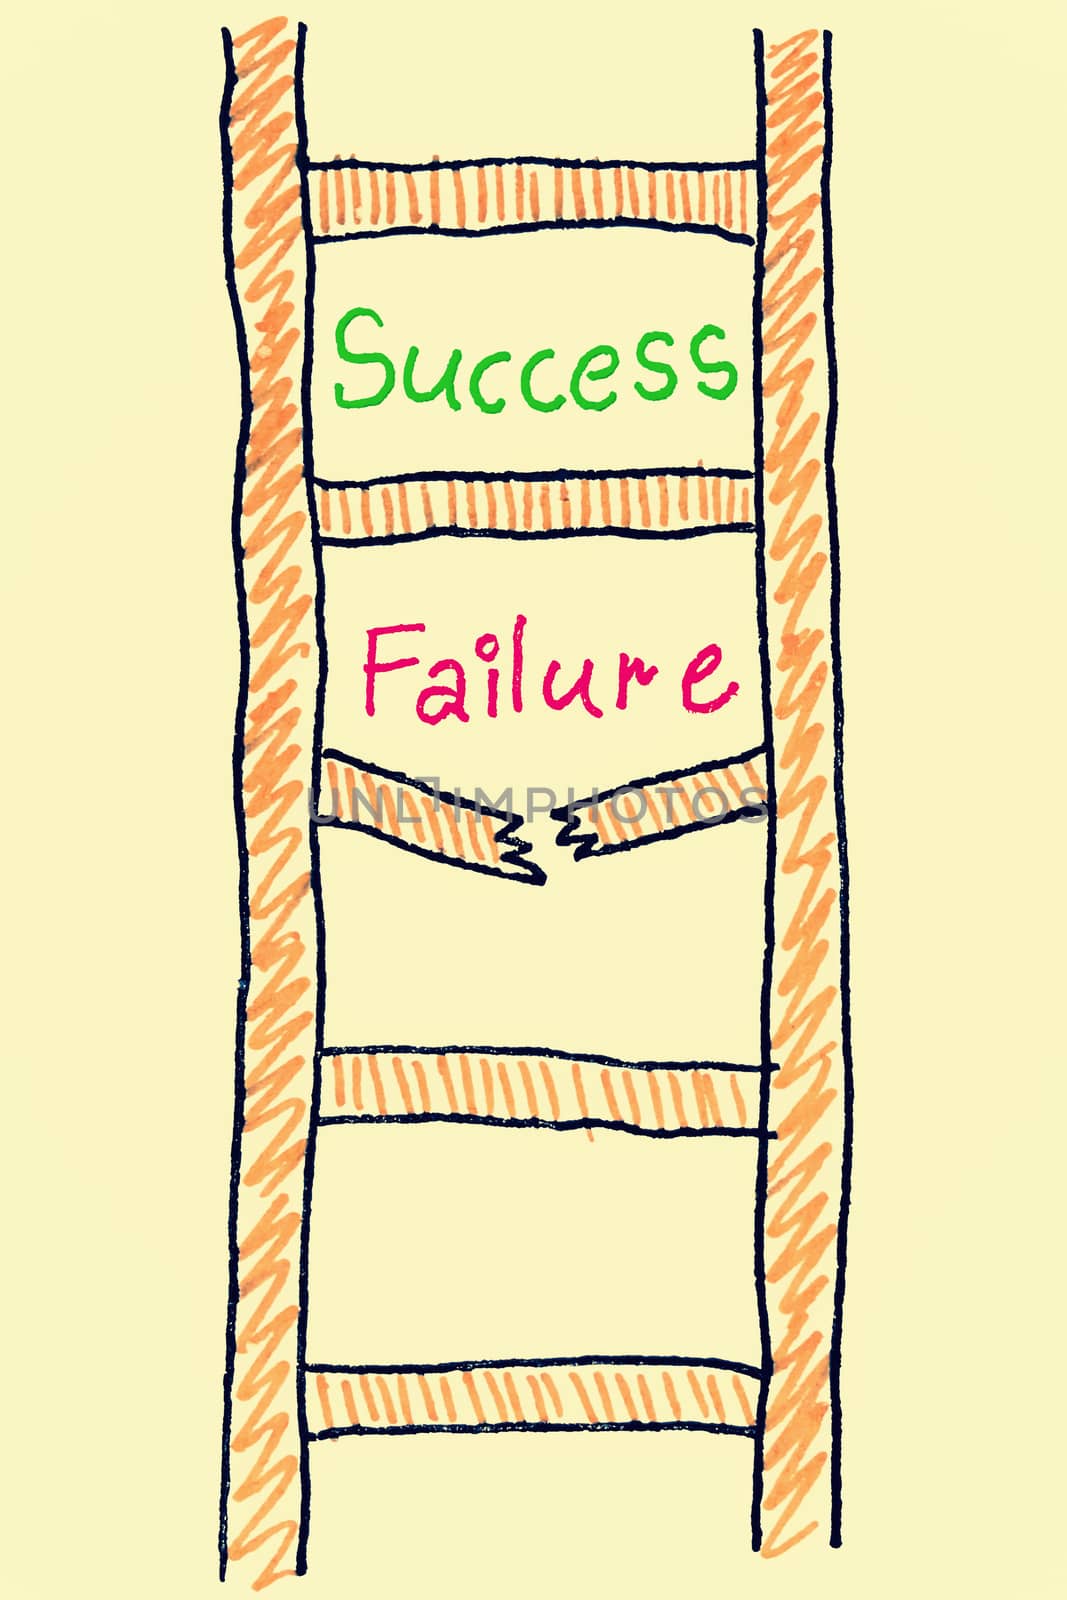 success failure ladder concept by yands